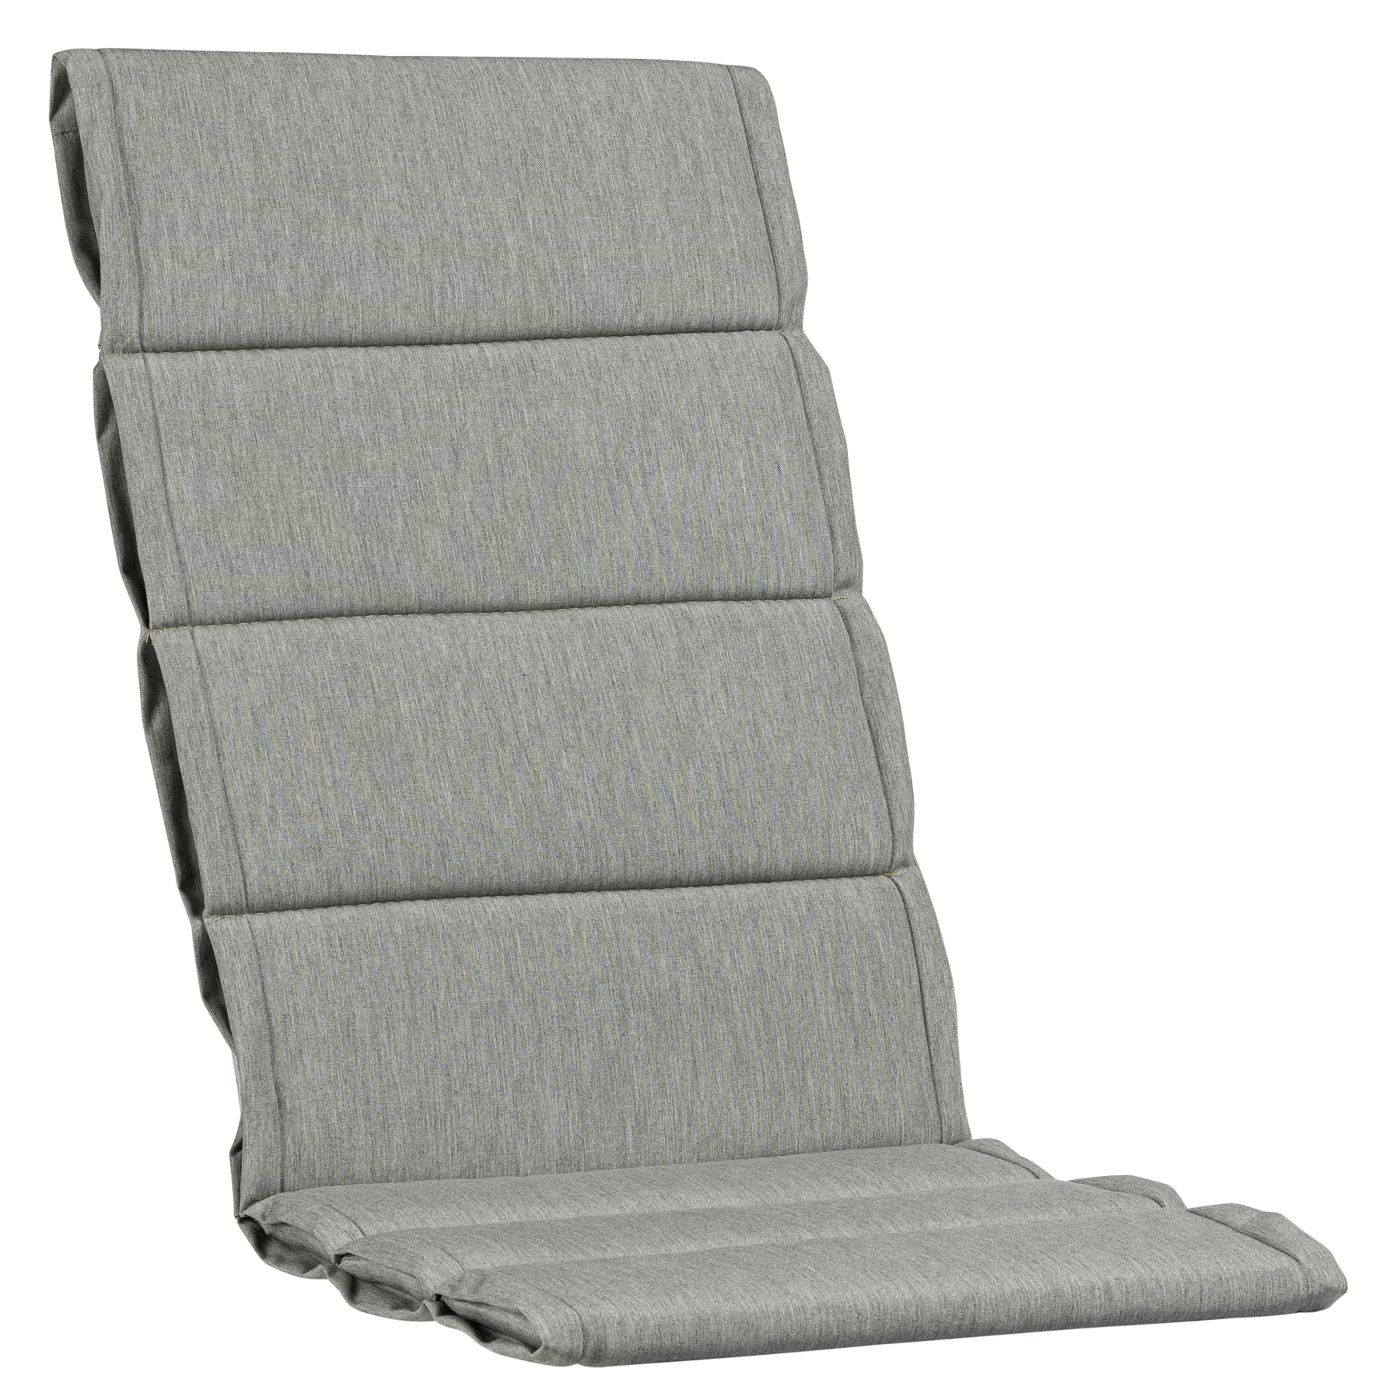 XL-Gartenmöbel Onlineshop 8001 hellgrau-meliert Sesselauflage hoch Dessin Smell Kettler 123x50cm